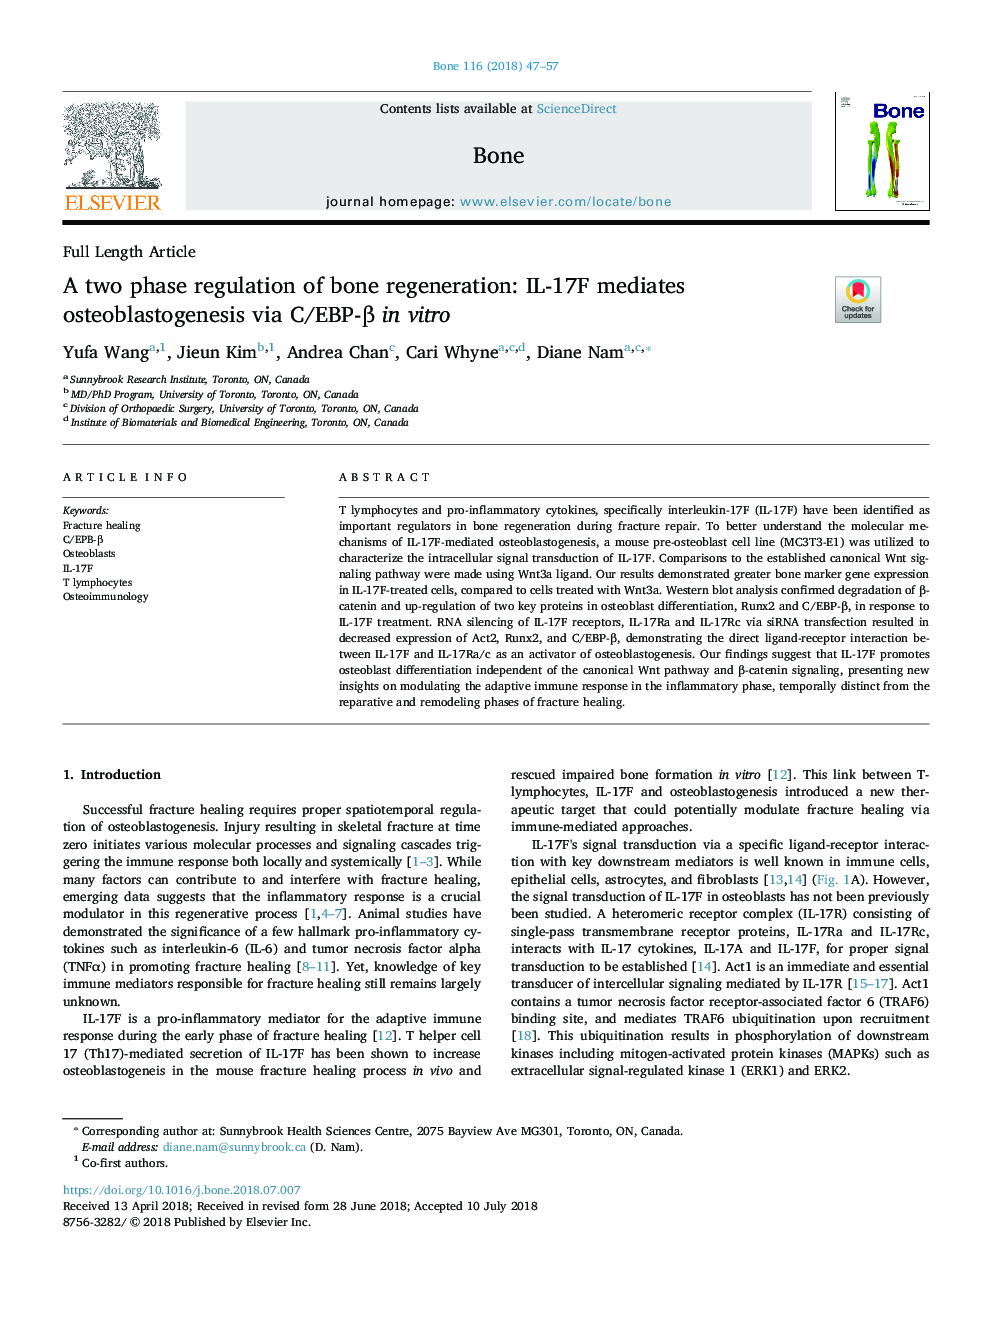 A two phase regulation of bone regeneration: IL-17F mediates osteoblastogenesis via C/EBP-Î² in vitro